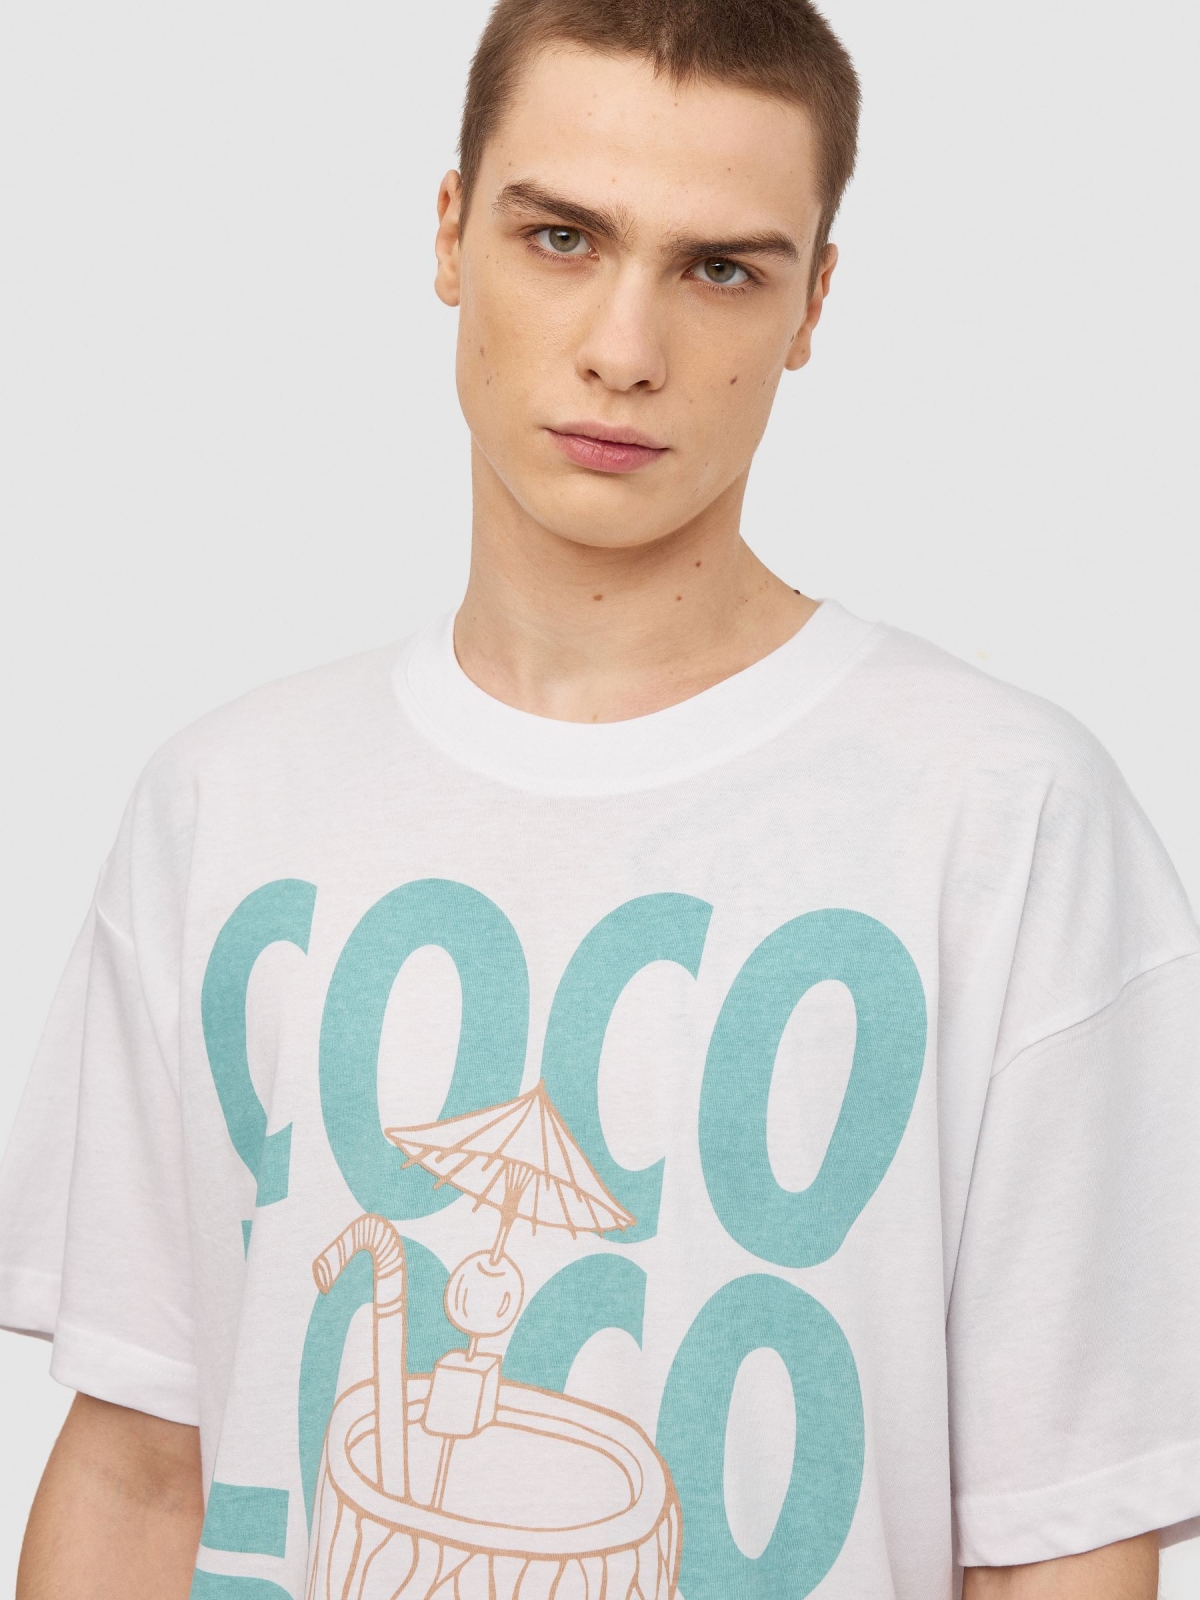 T-shirt Coco Loco branco vista detalhe